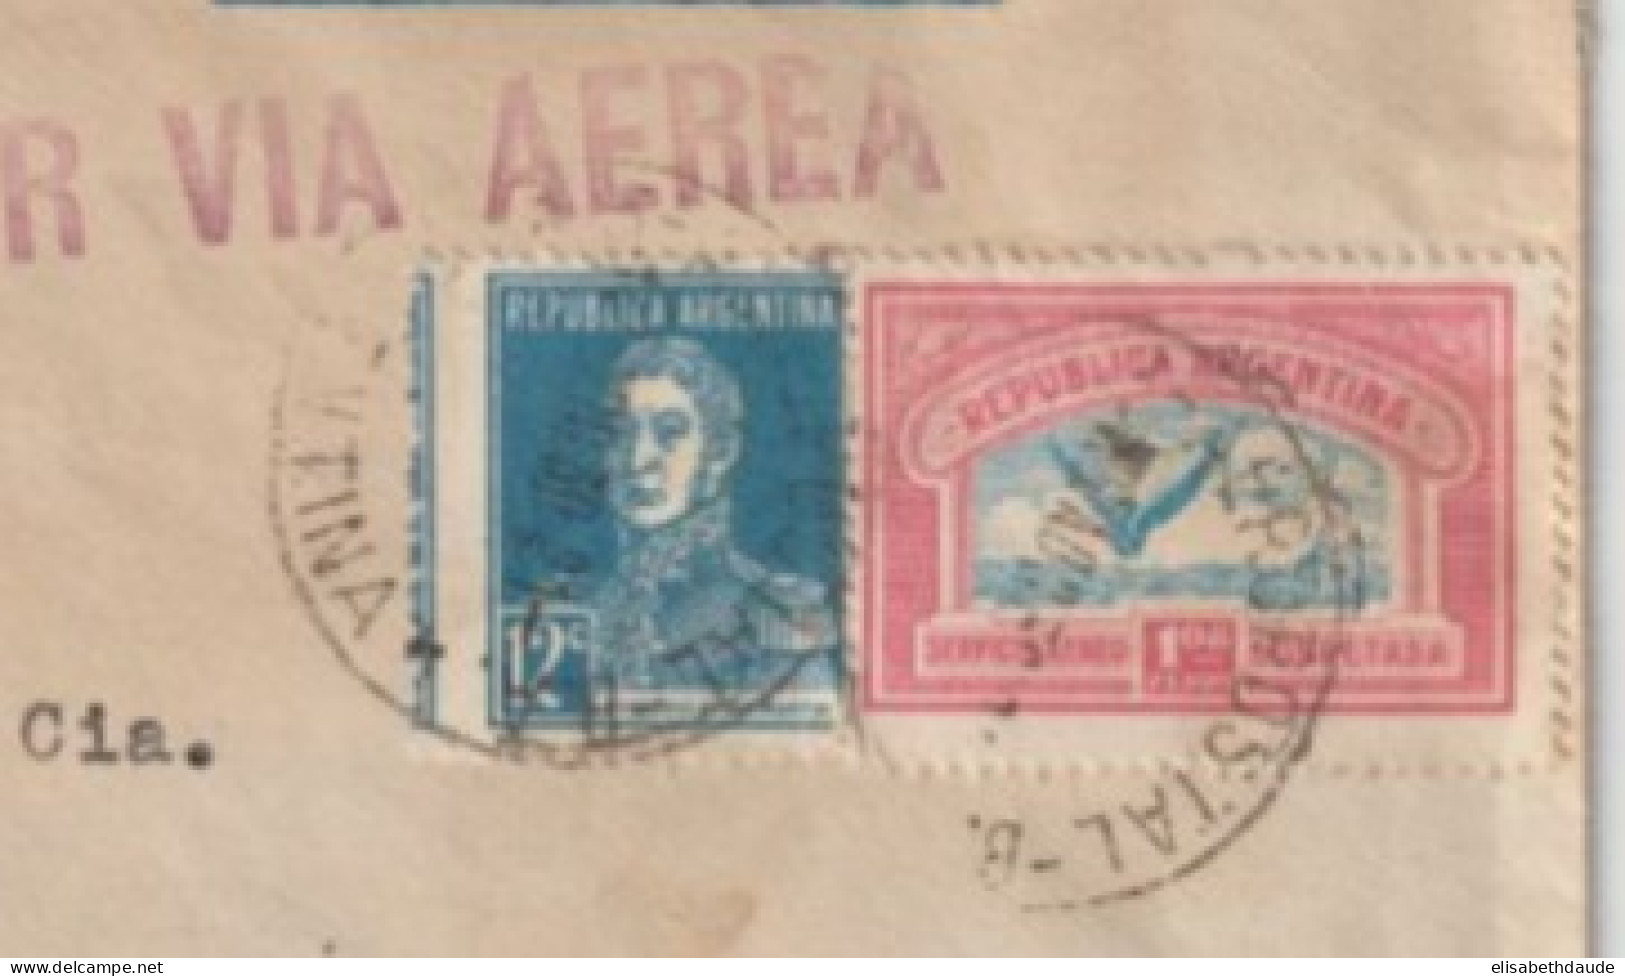 ARGENTINA - 1930 - RARE POSTE AERIENNE 1,08 + VARIETE 12c /ENVELOPPE De BUENOS AIRES OBLITERATION AEROPOSTALE => PARIS - Briefe U. Dokumente